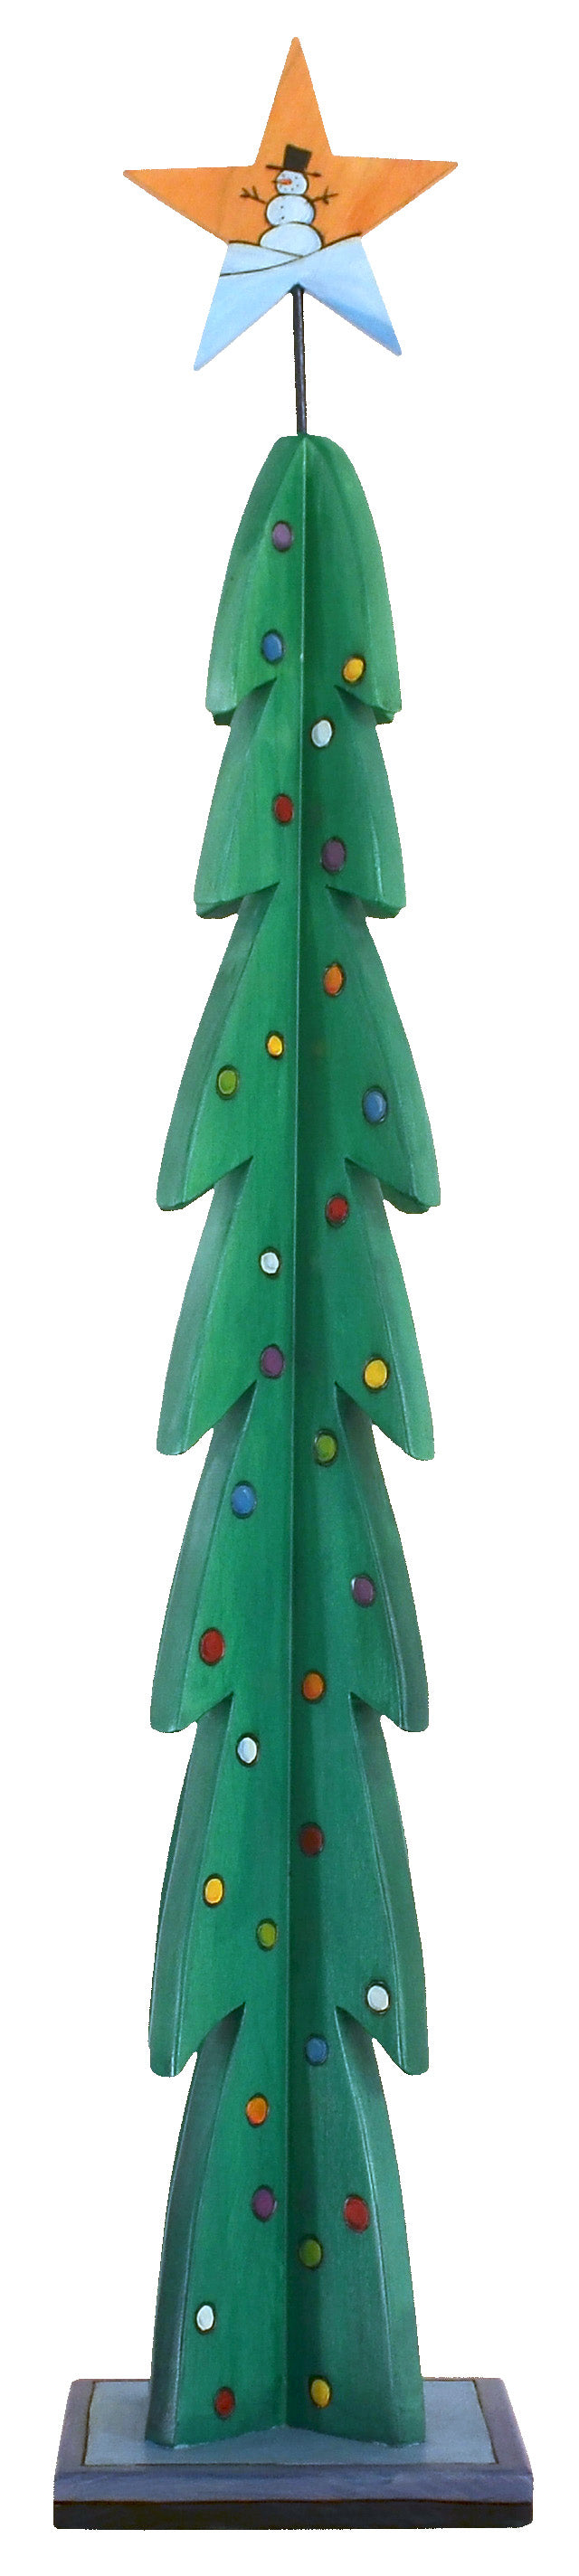 Large Christmas Tree Sculpture